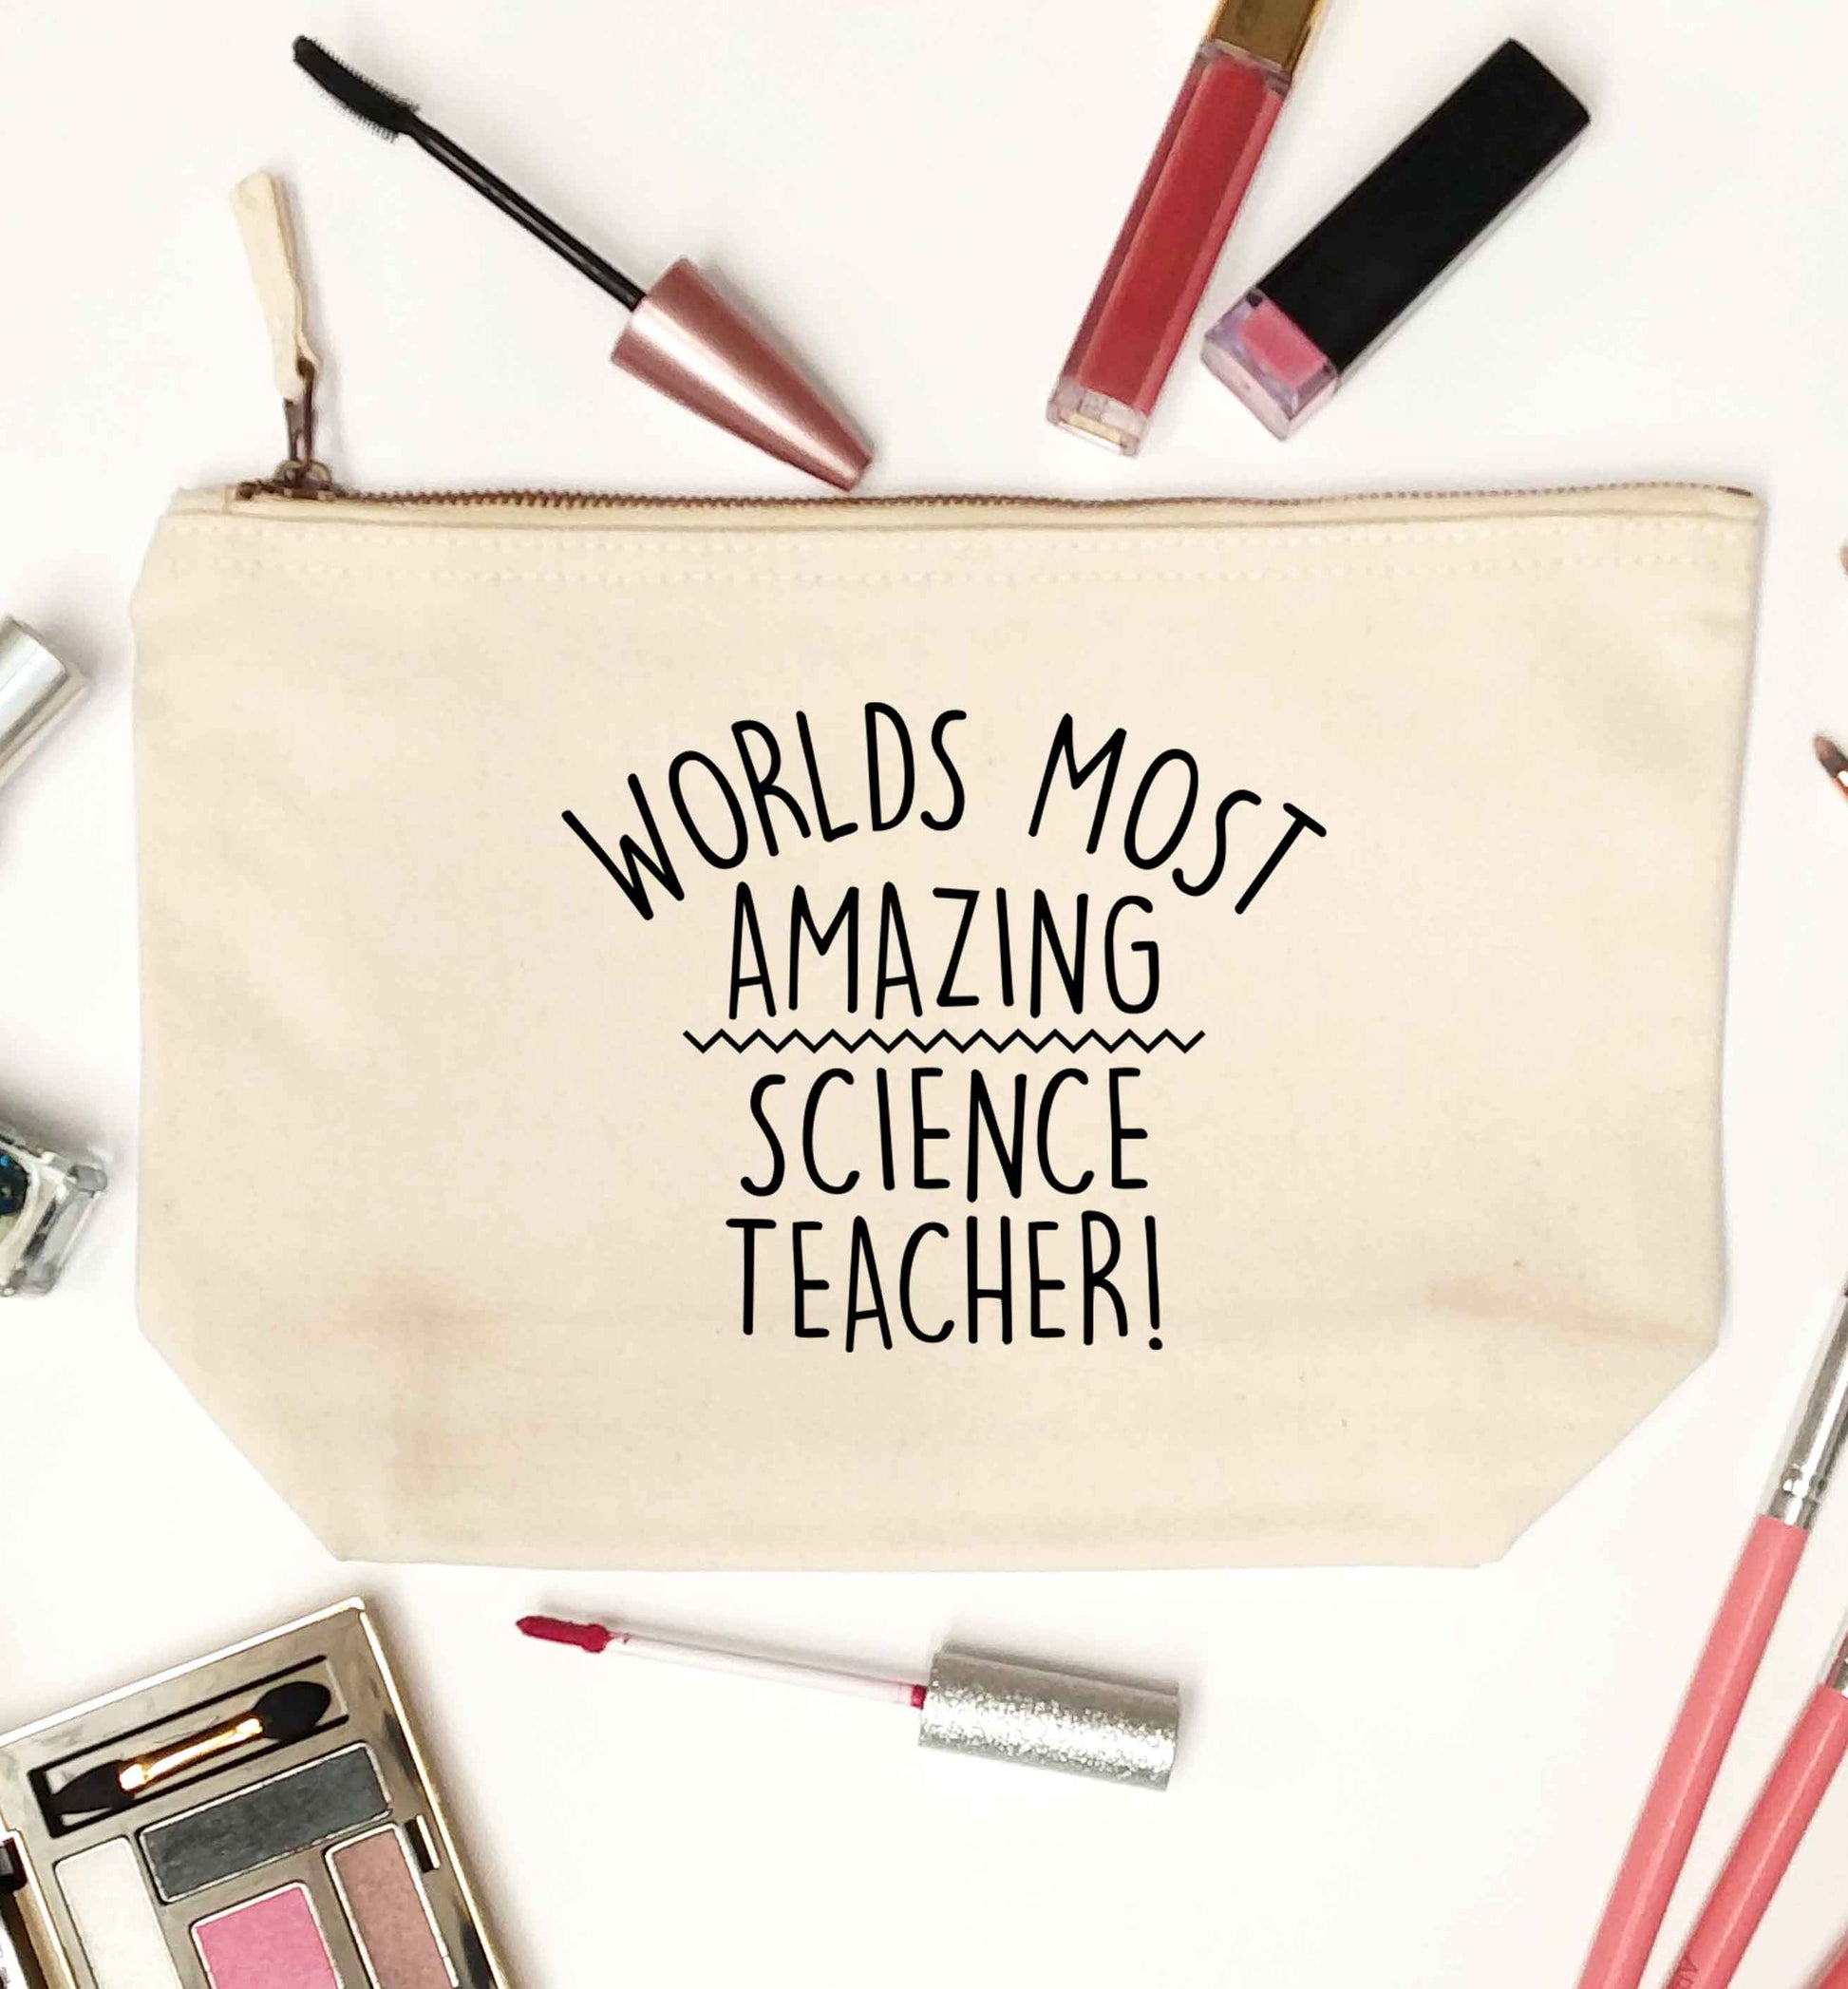 Worlds most amazing science teacher natural makeup bag